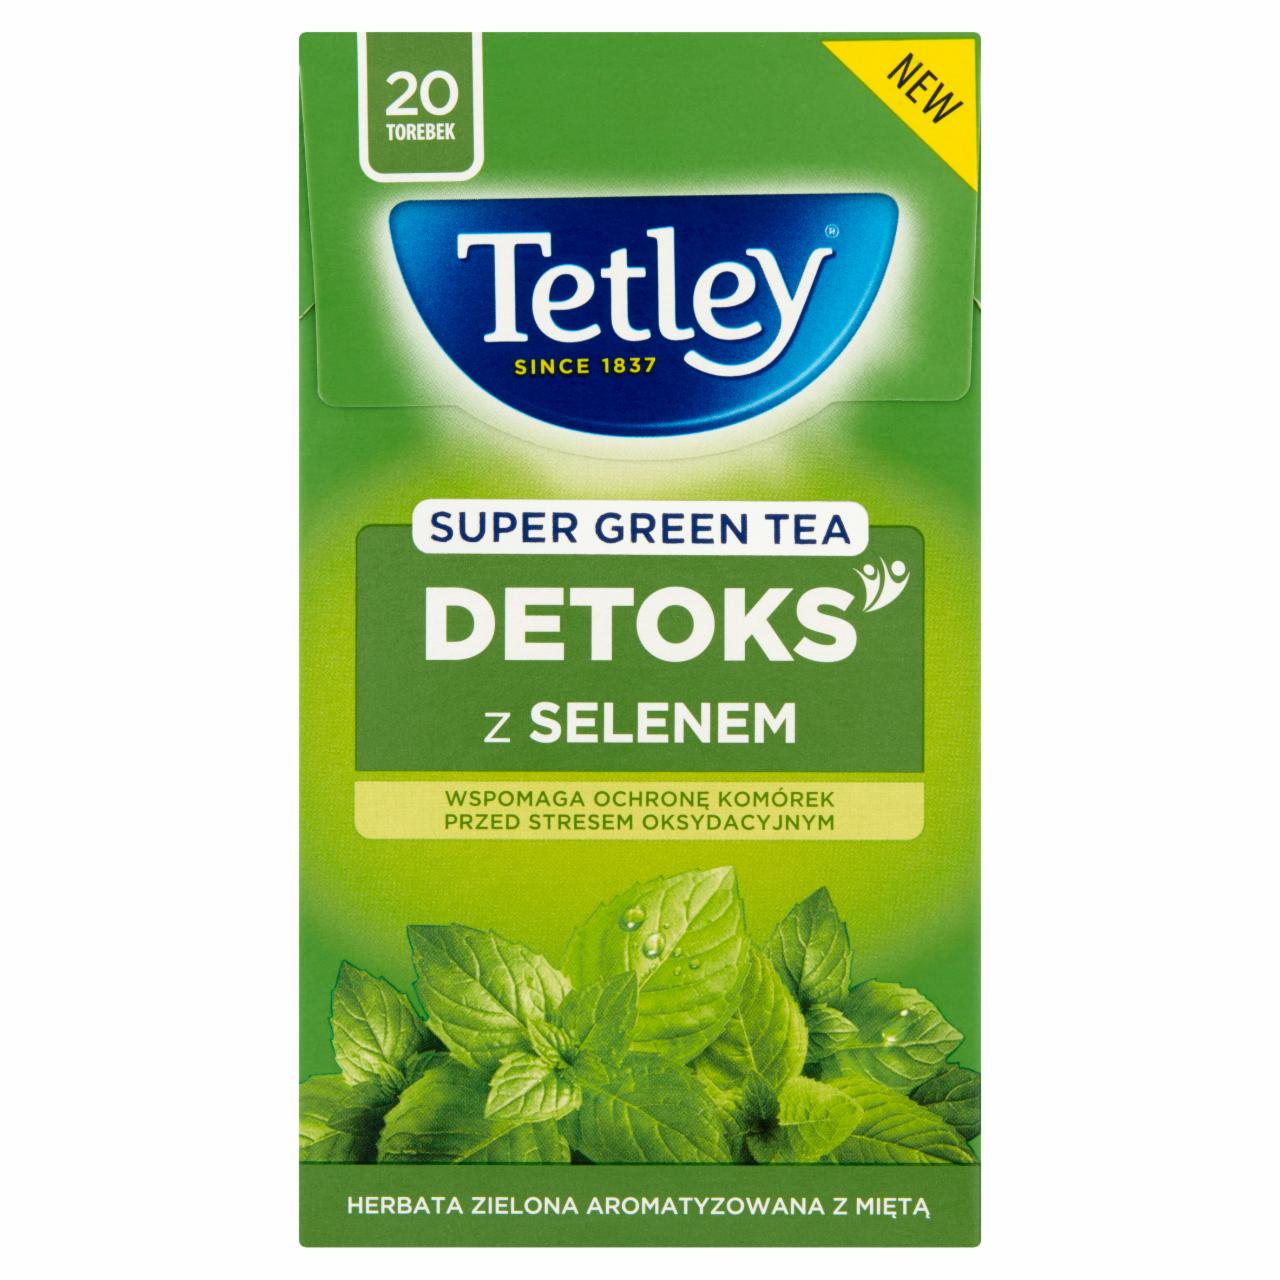 Zdjęcia - Tetley Super Green Tea Detoks Herbata zielona z miętą